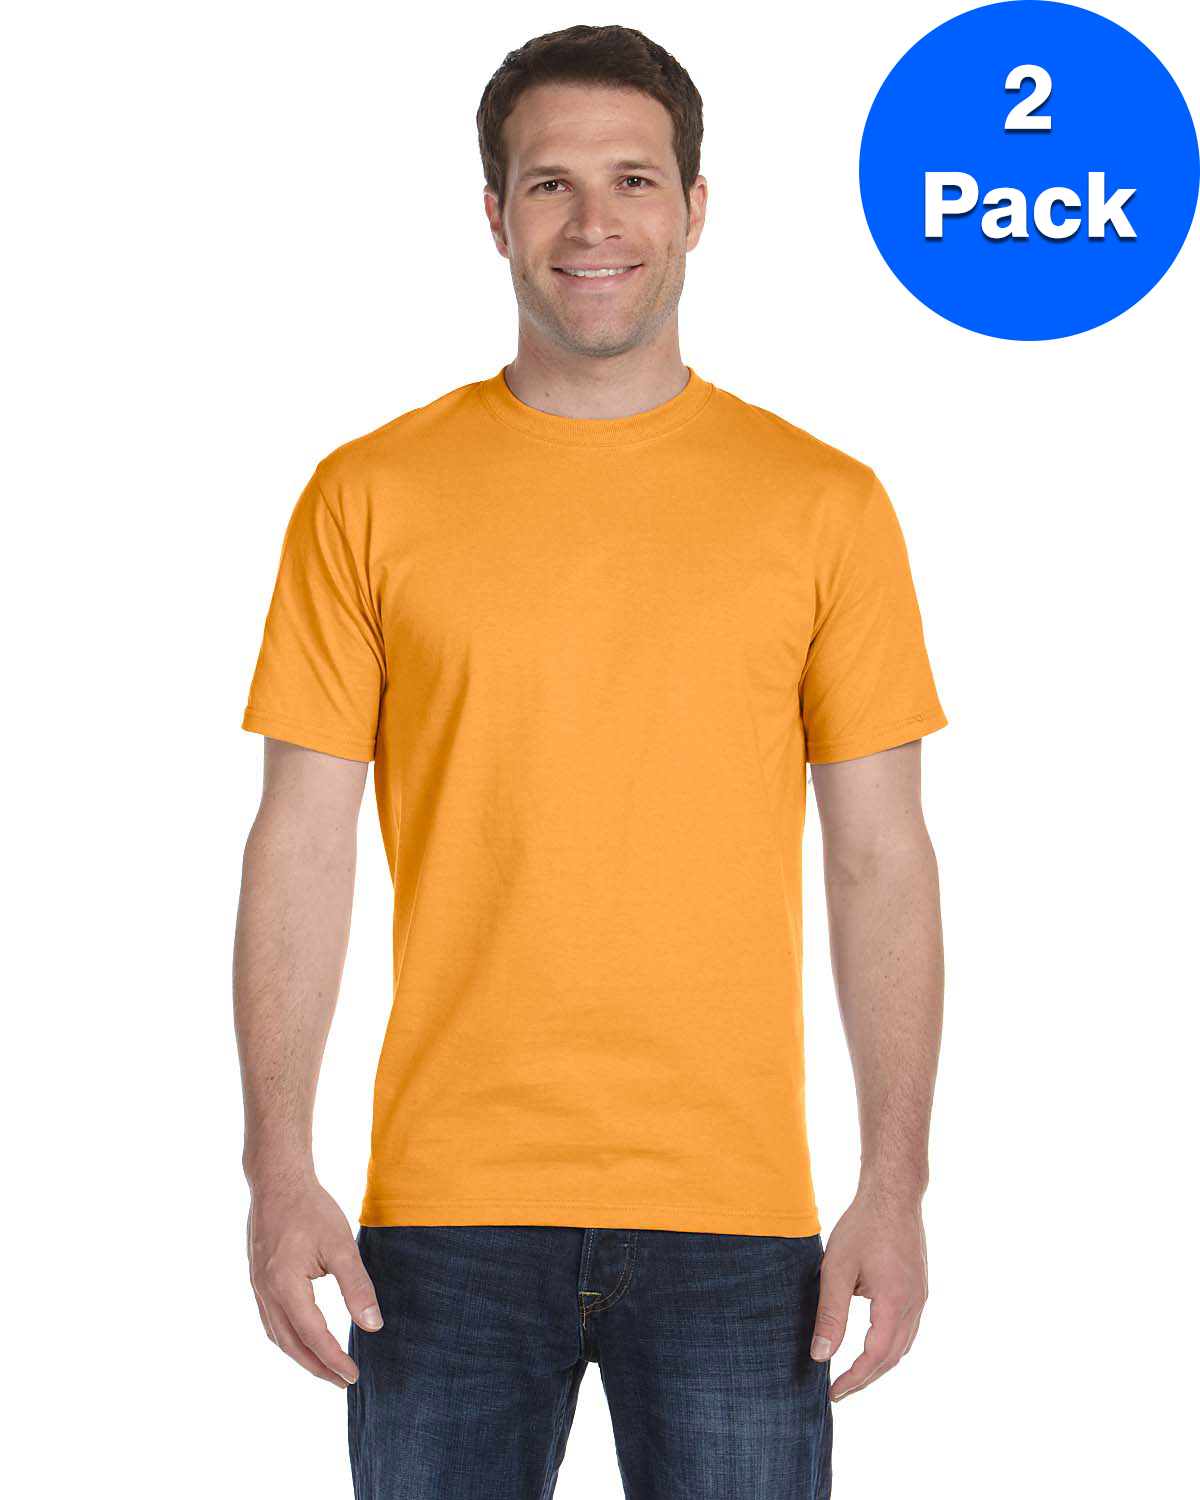 Mens 5.2 oz. ComfortSoft Cotton T-Shirt 5280 (2 PACK) - image 1 of 3